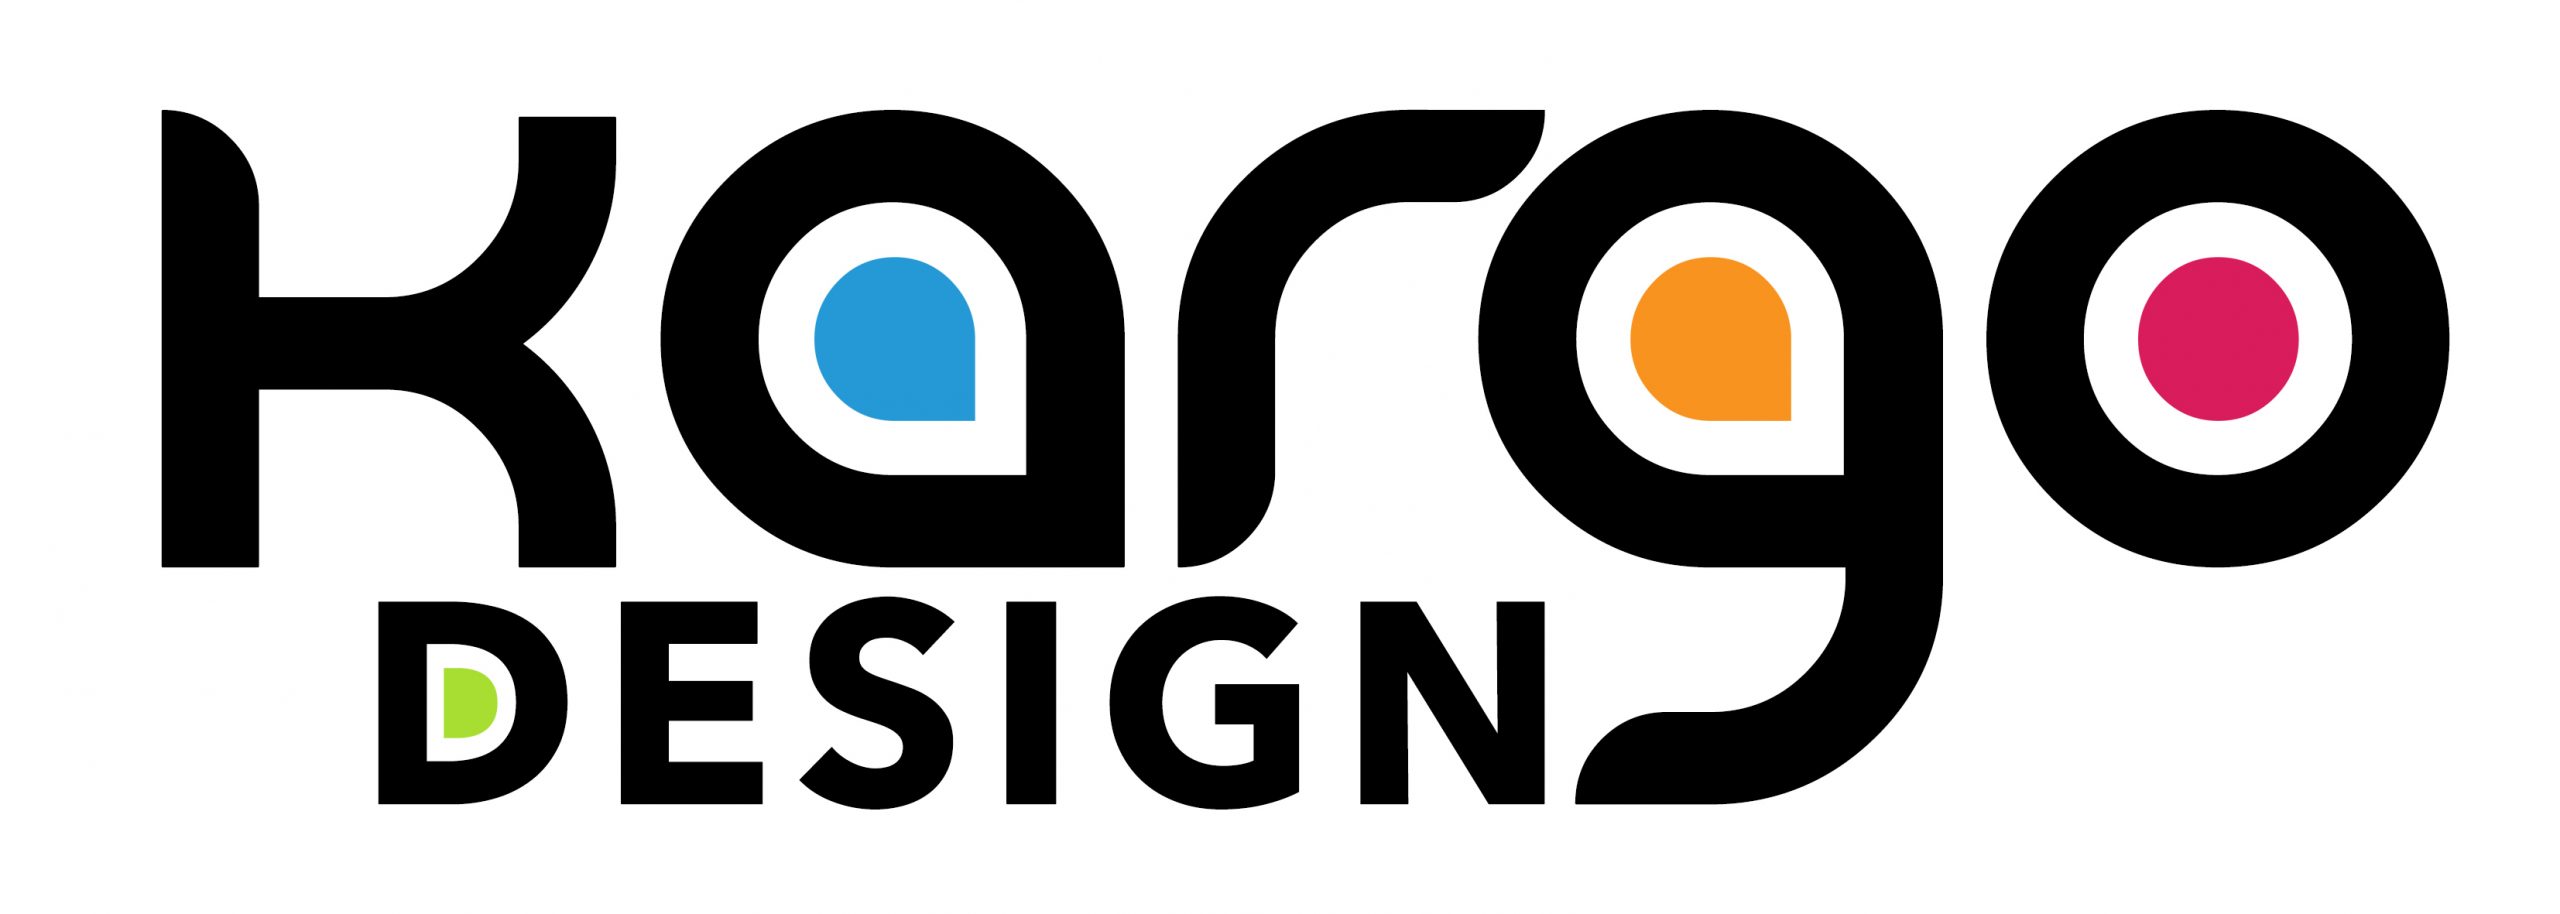 UK Digital Marketing Agency, Kargo Design Announces New Website Launch